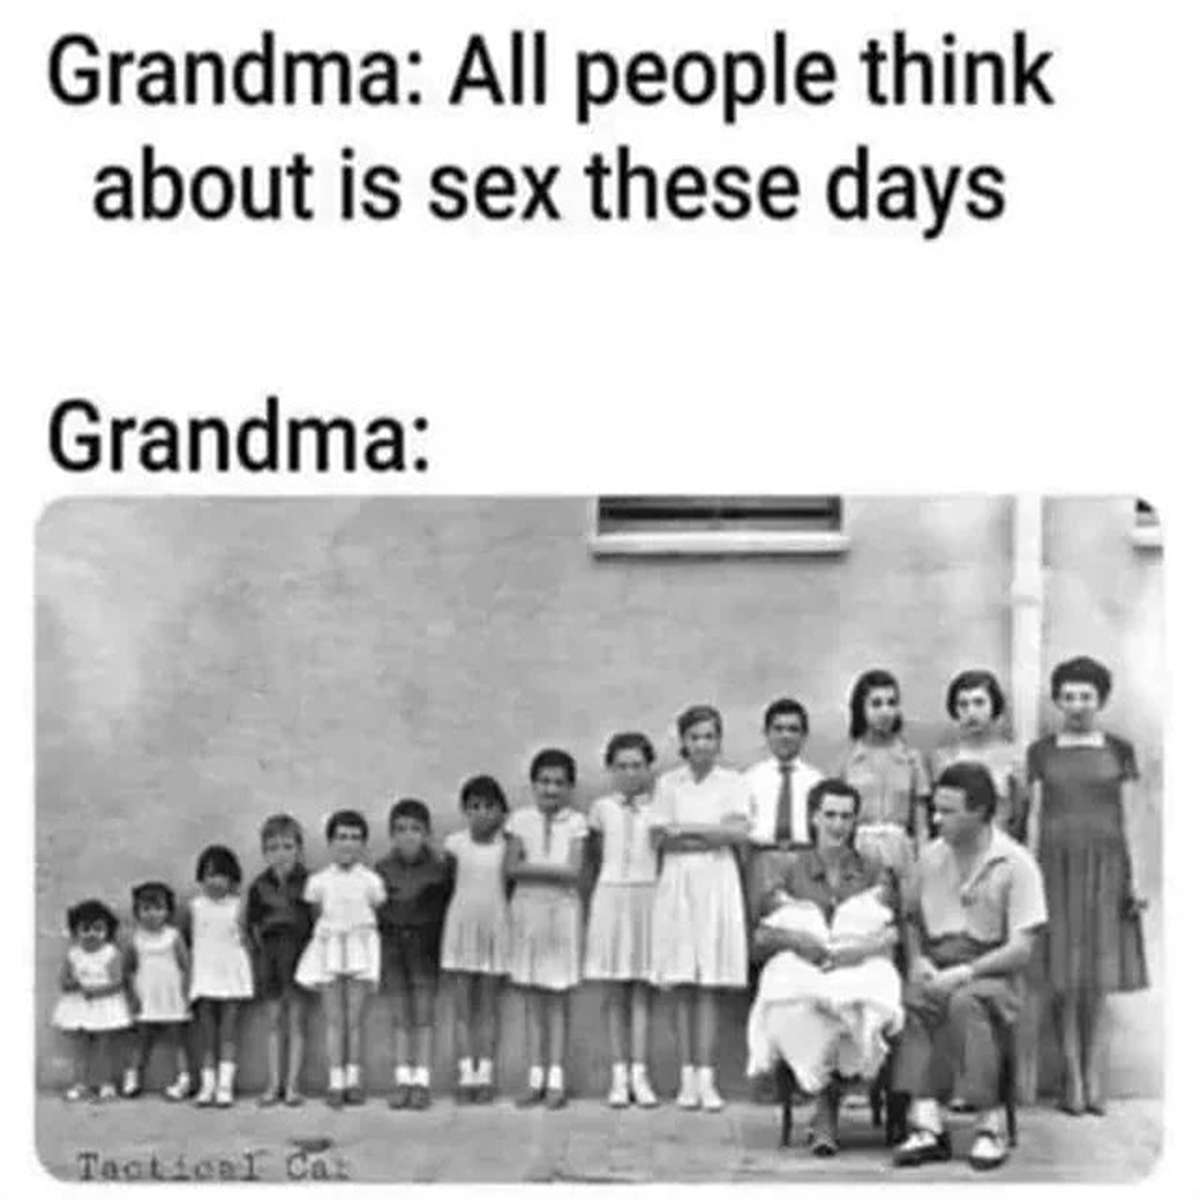 dank memes - grandma all people think about is sex these days - Grandma All people think about is sex these days Grandma Tactical Cat